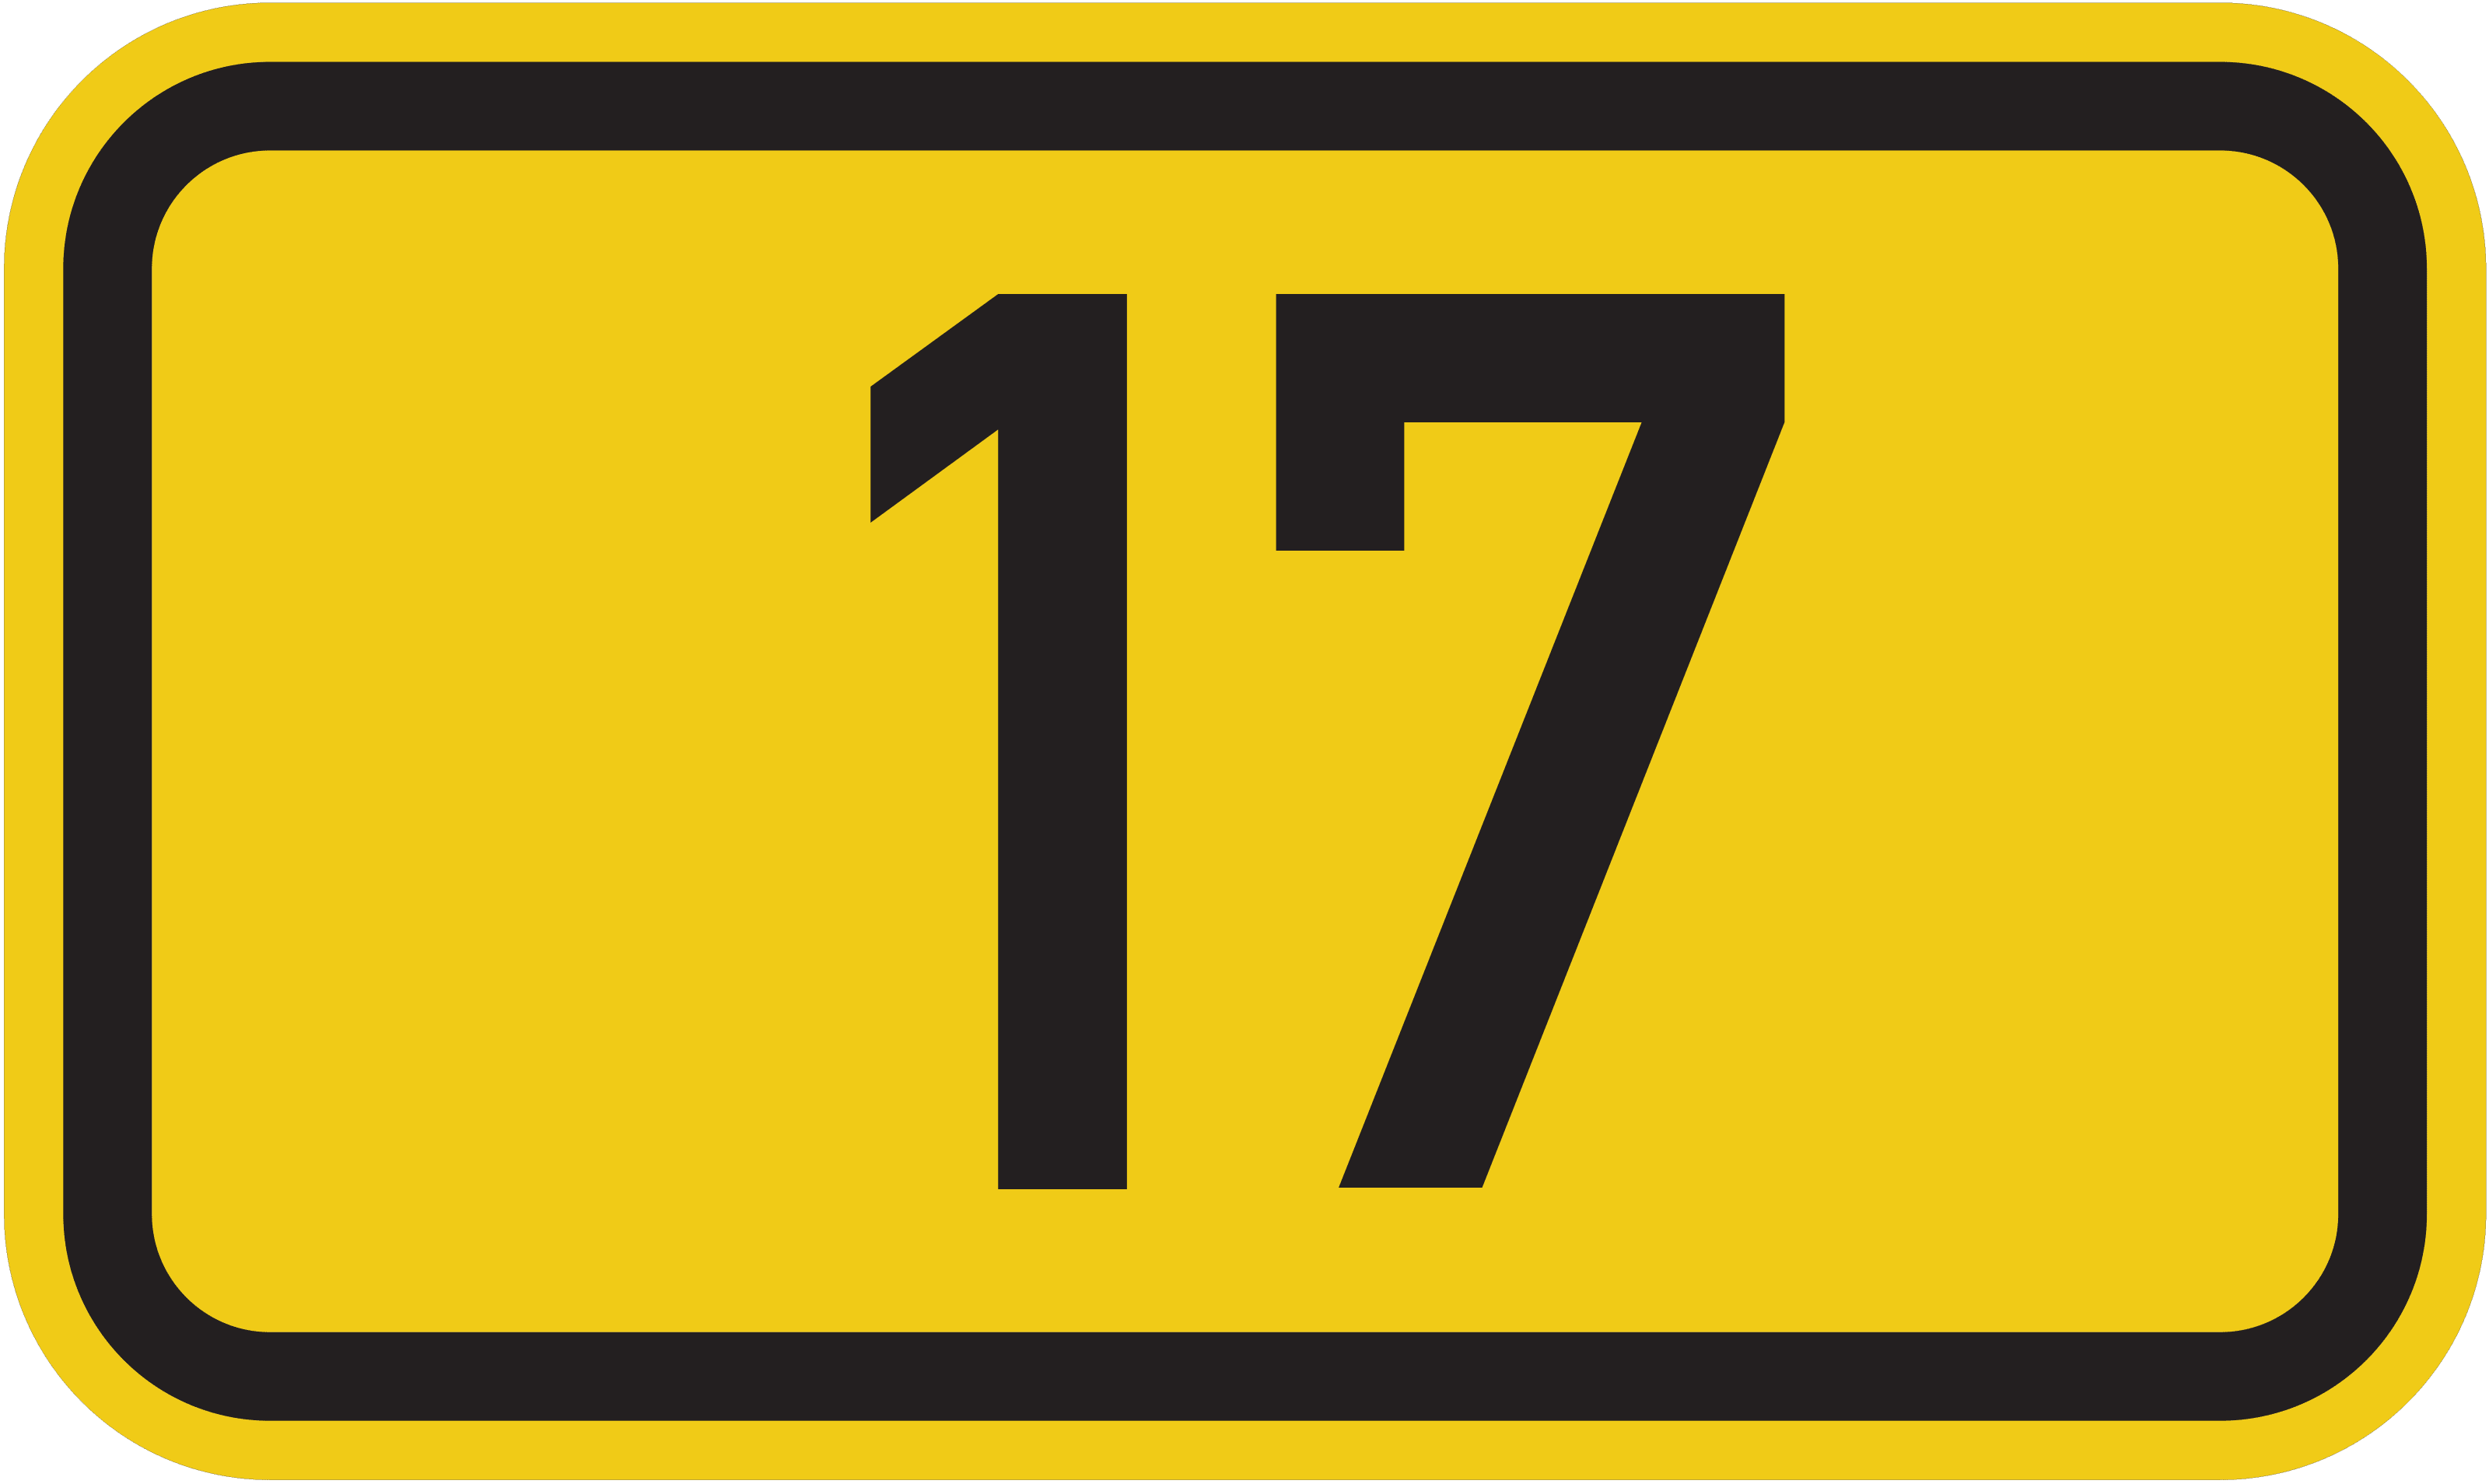 Straßenschild Bundesstraße 17